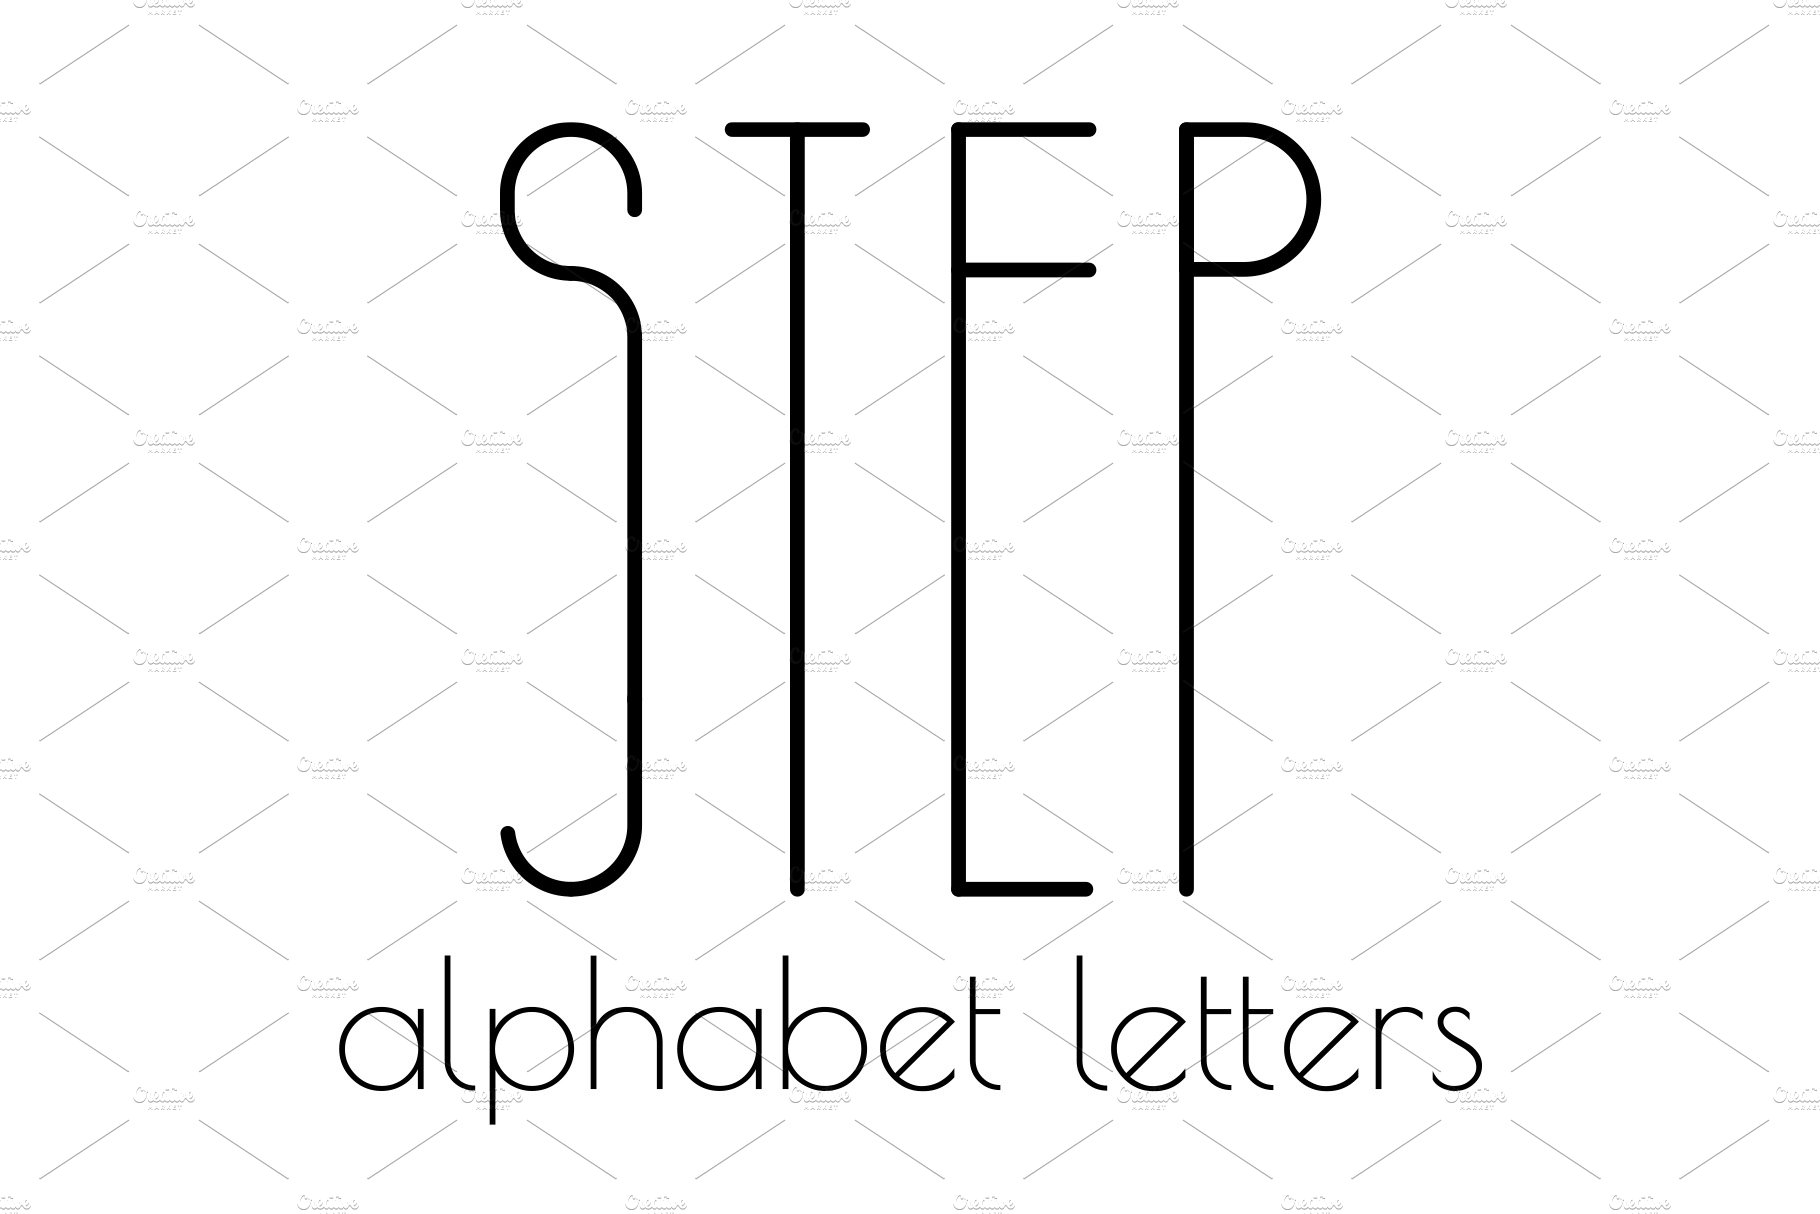 Alphabet letters Step font cover image.